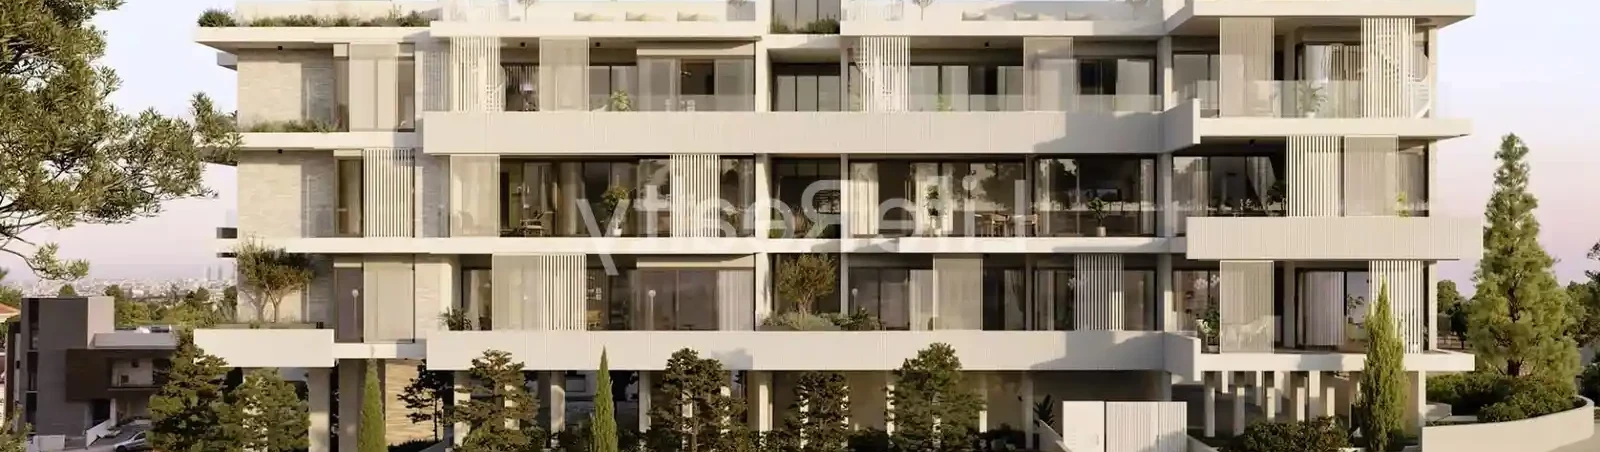 2-bedroom penthouse fоr sаle €485.000, image 1